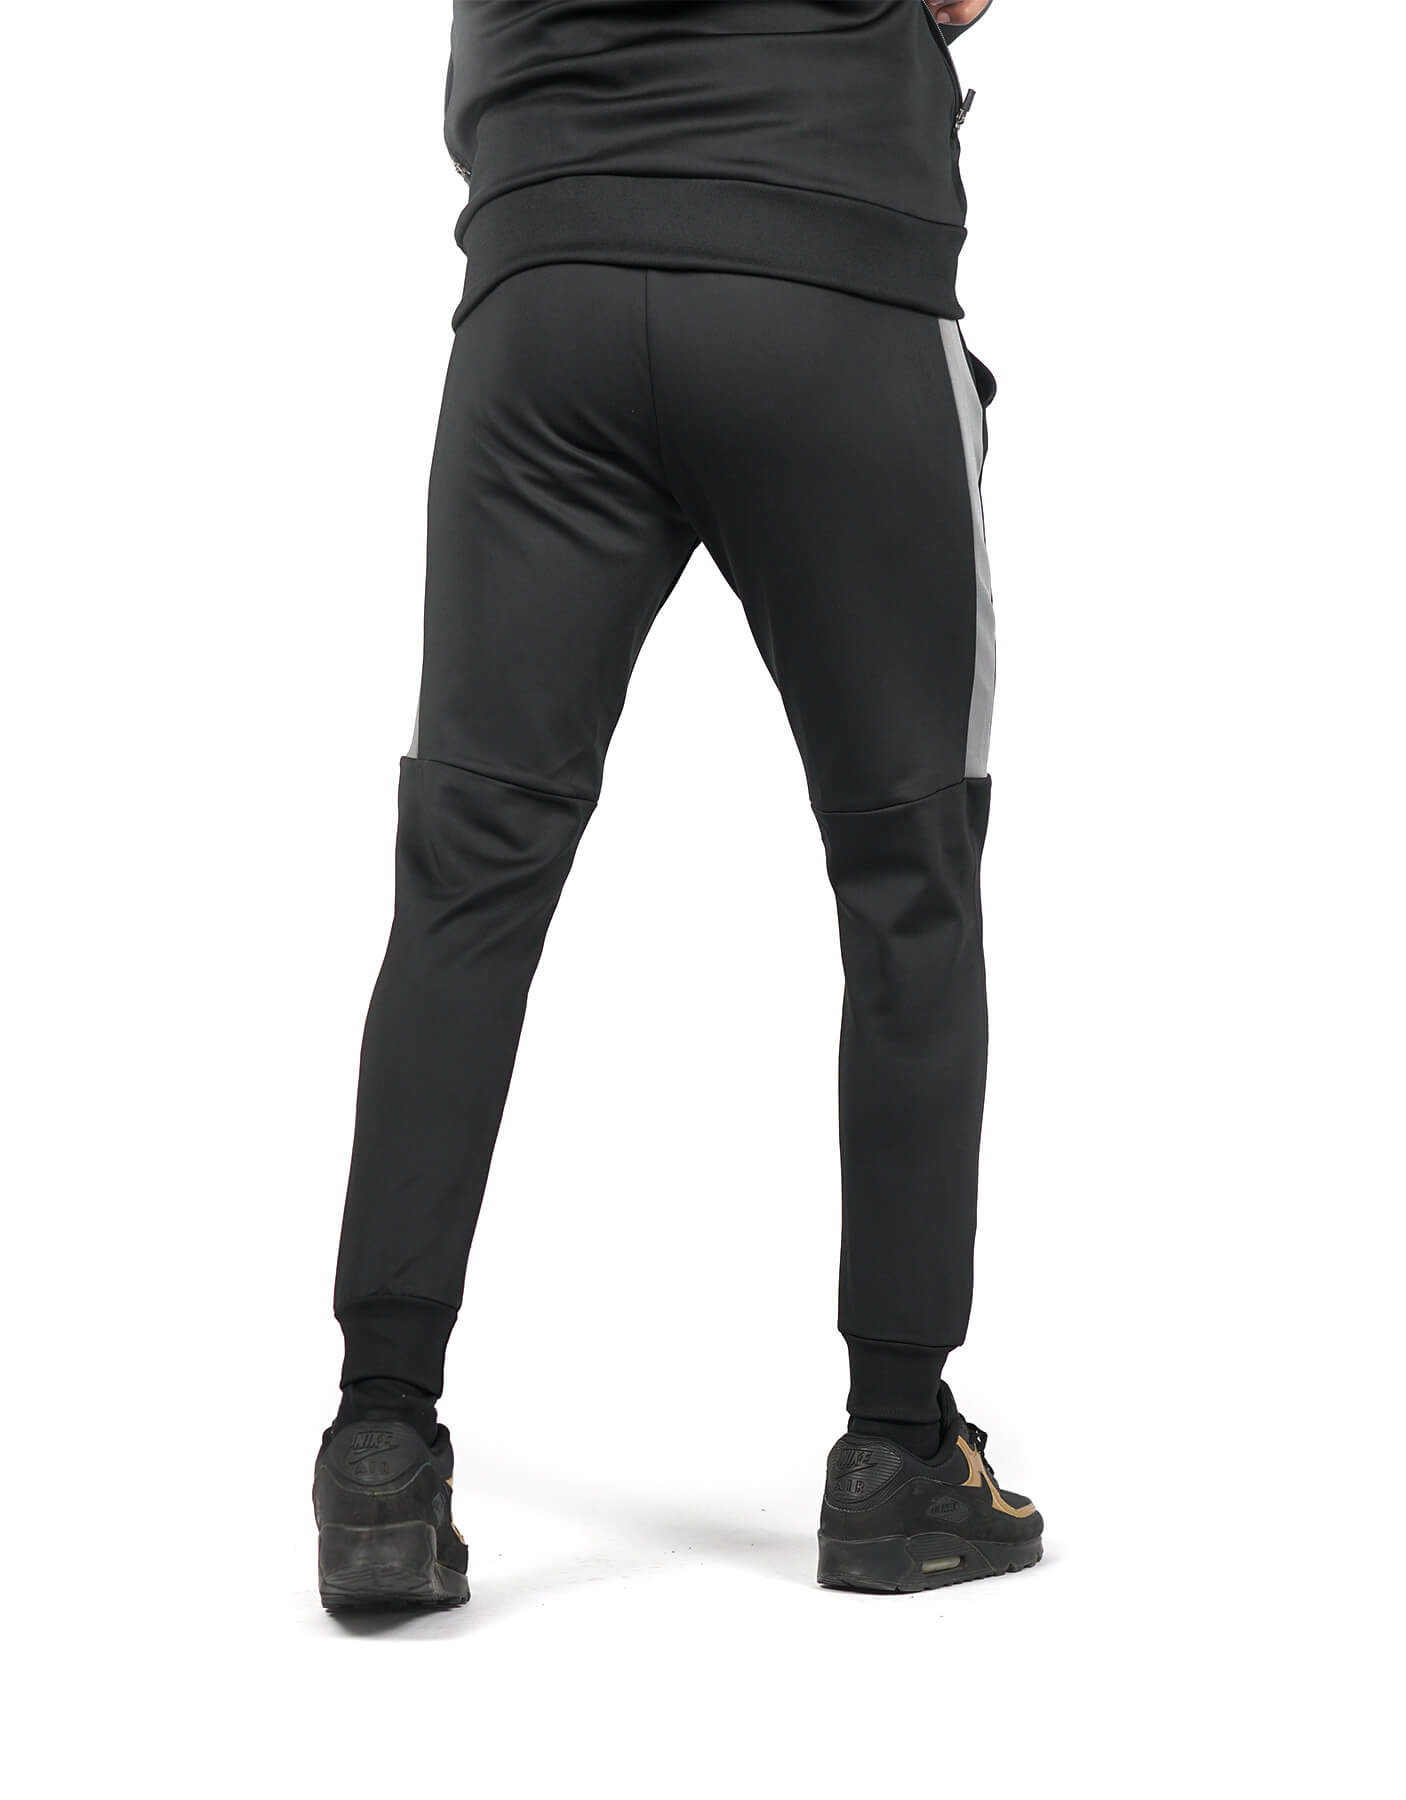 Vertex Joggers - Black-Bodybrics-